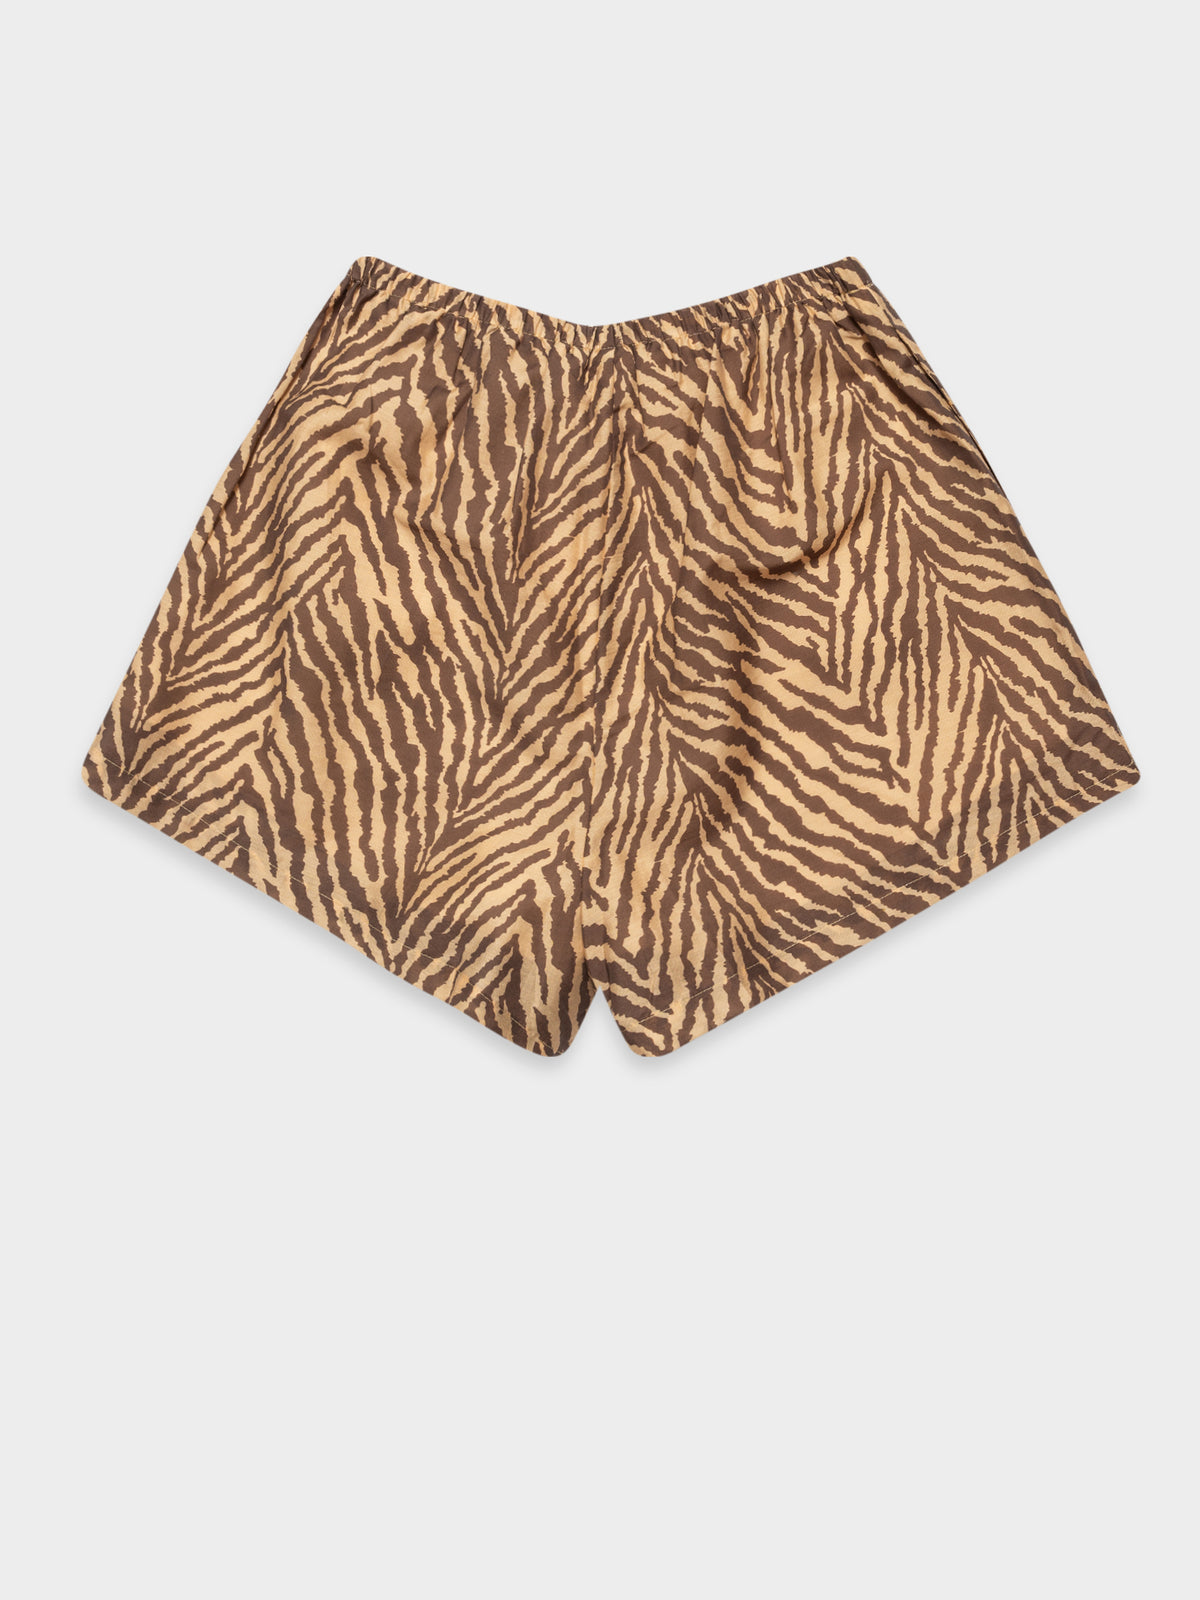 Payne Shorts in Brown &amp; Tan Zebra Print